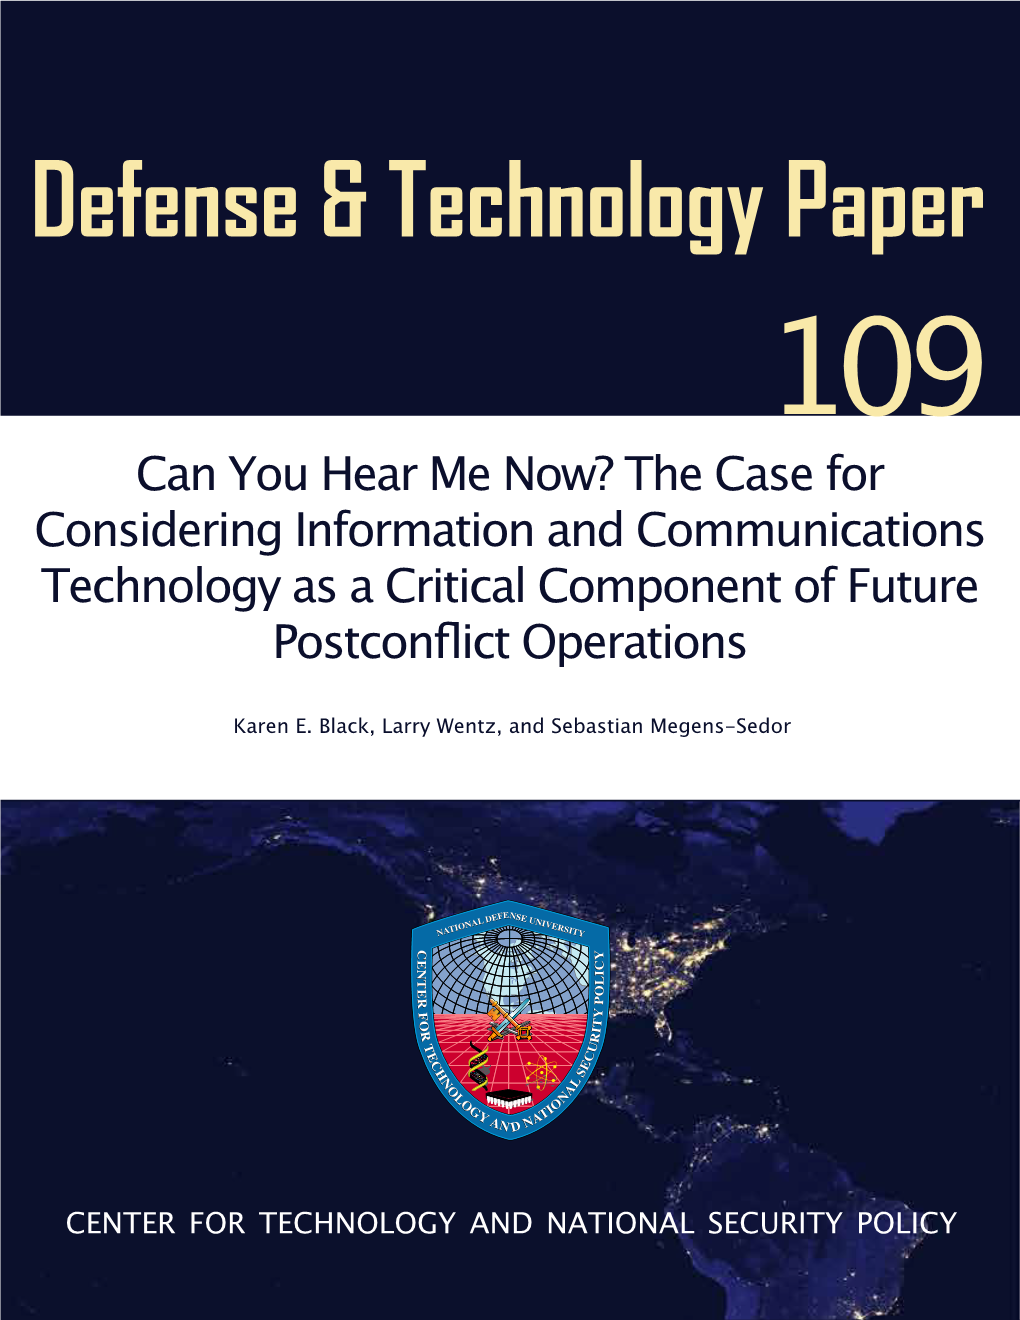 Defense & Technology Paper